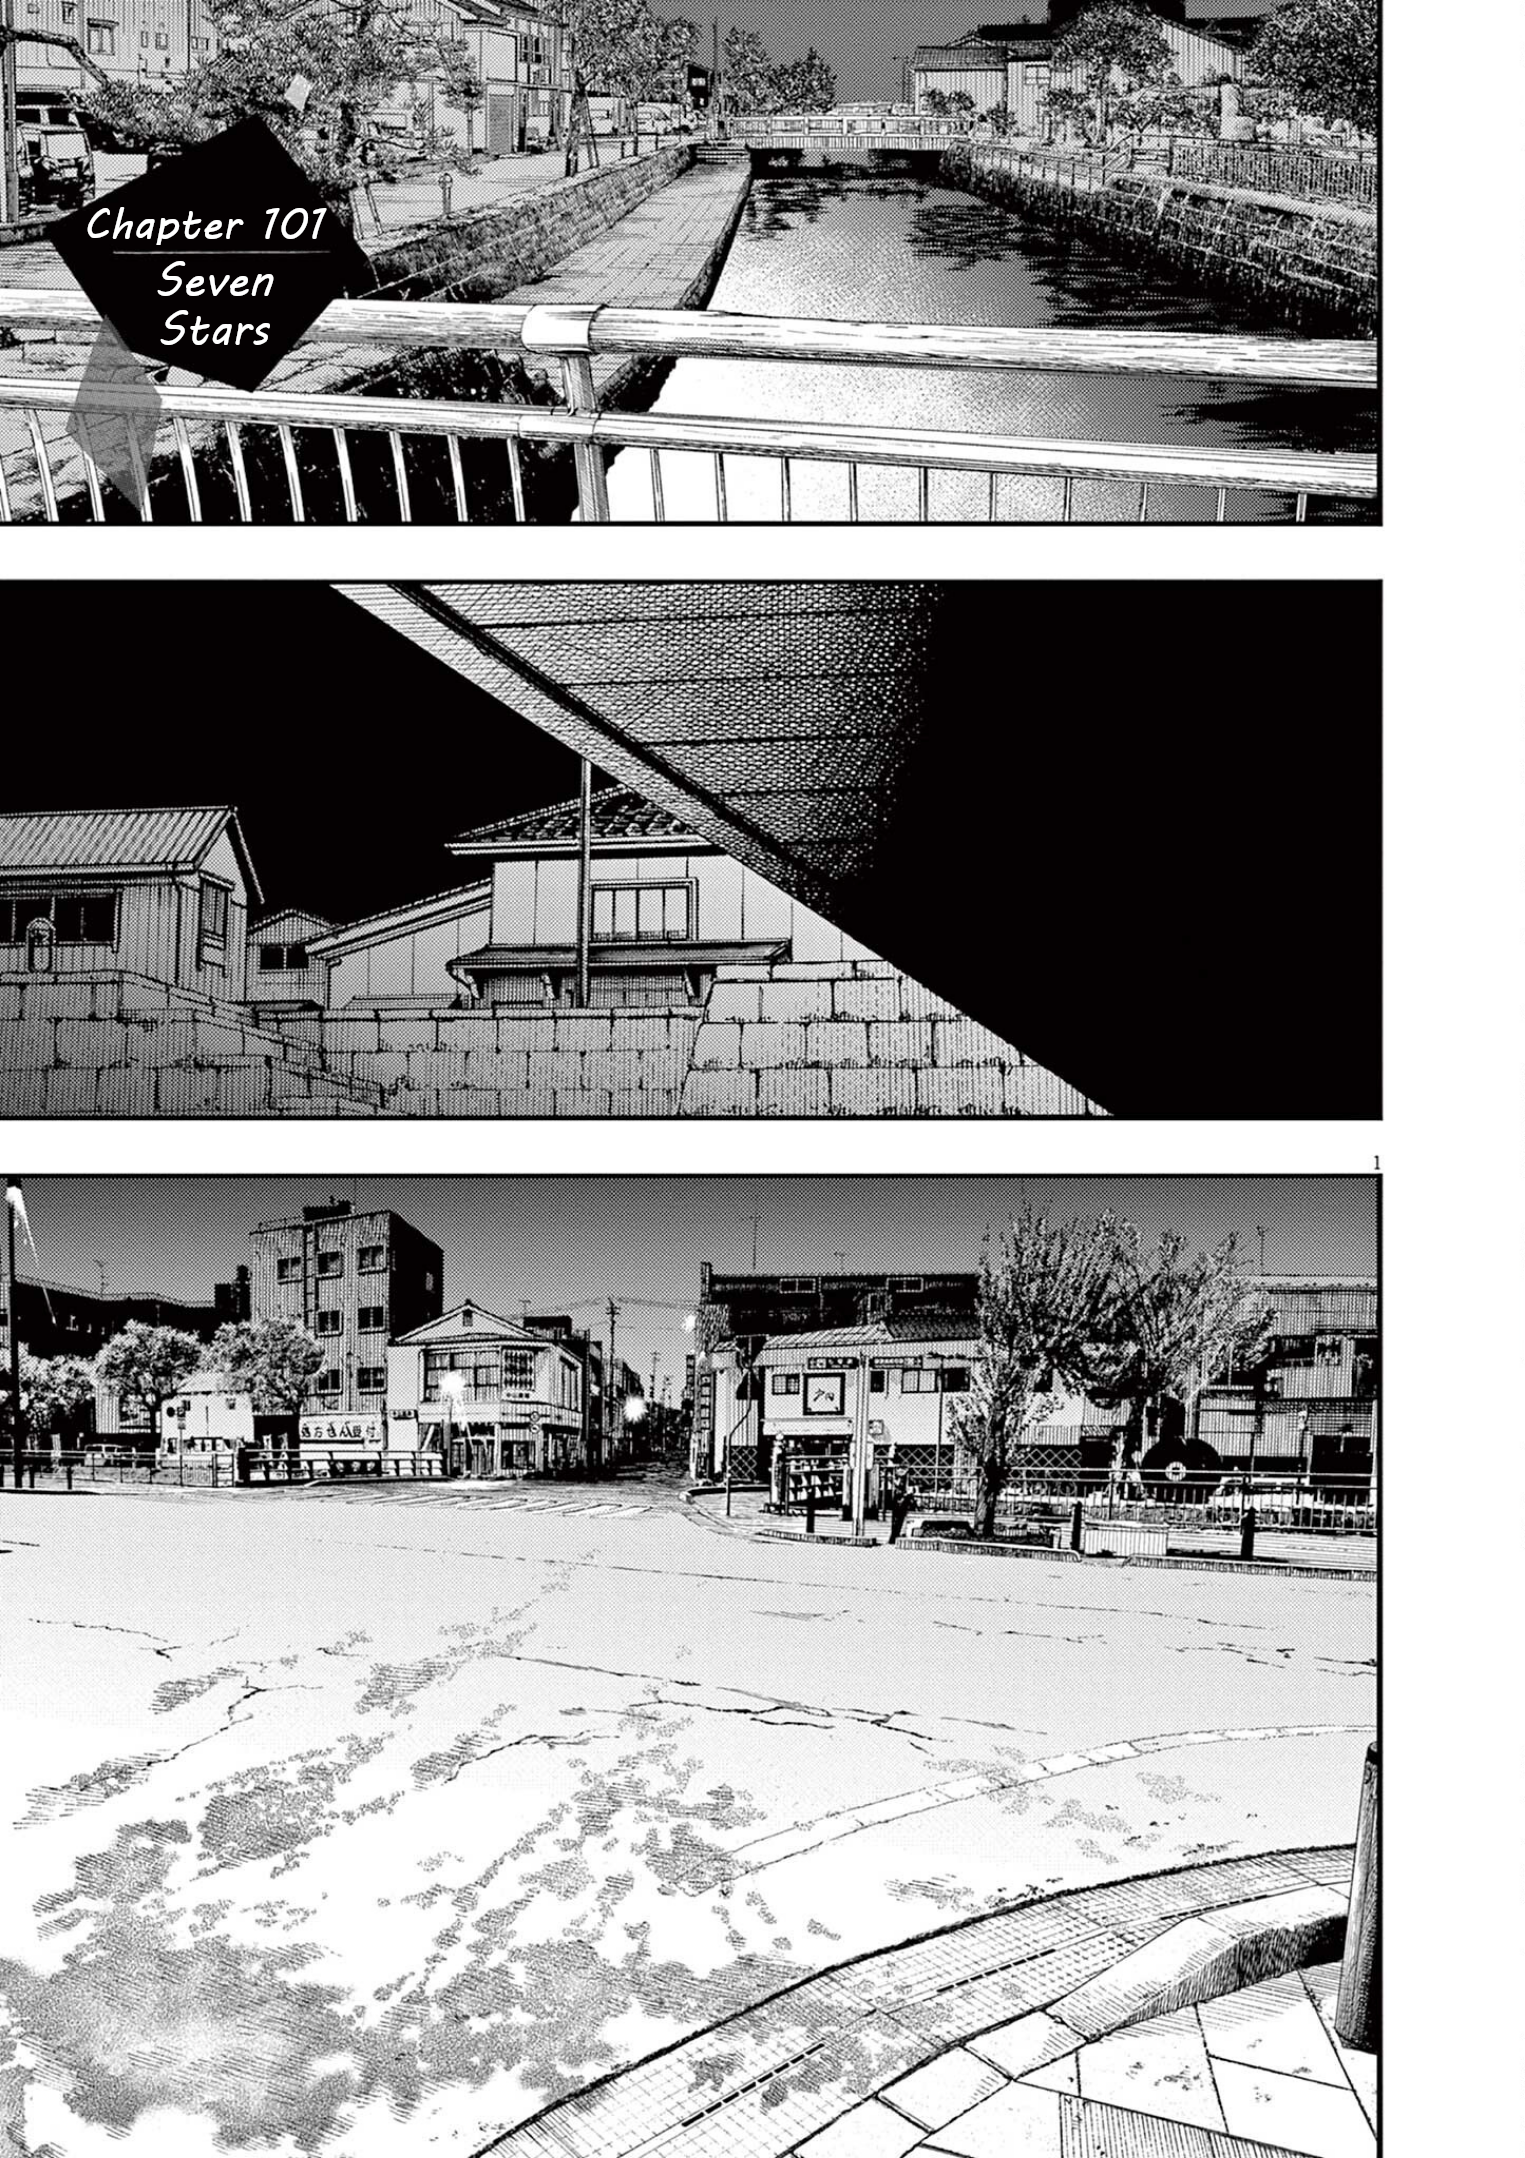 Kimi wa Houkago Insomnia Vol.12-Chapter.101-Seven-Stars Image